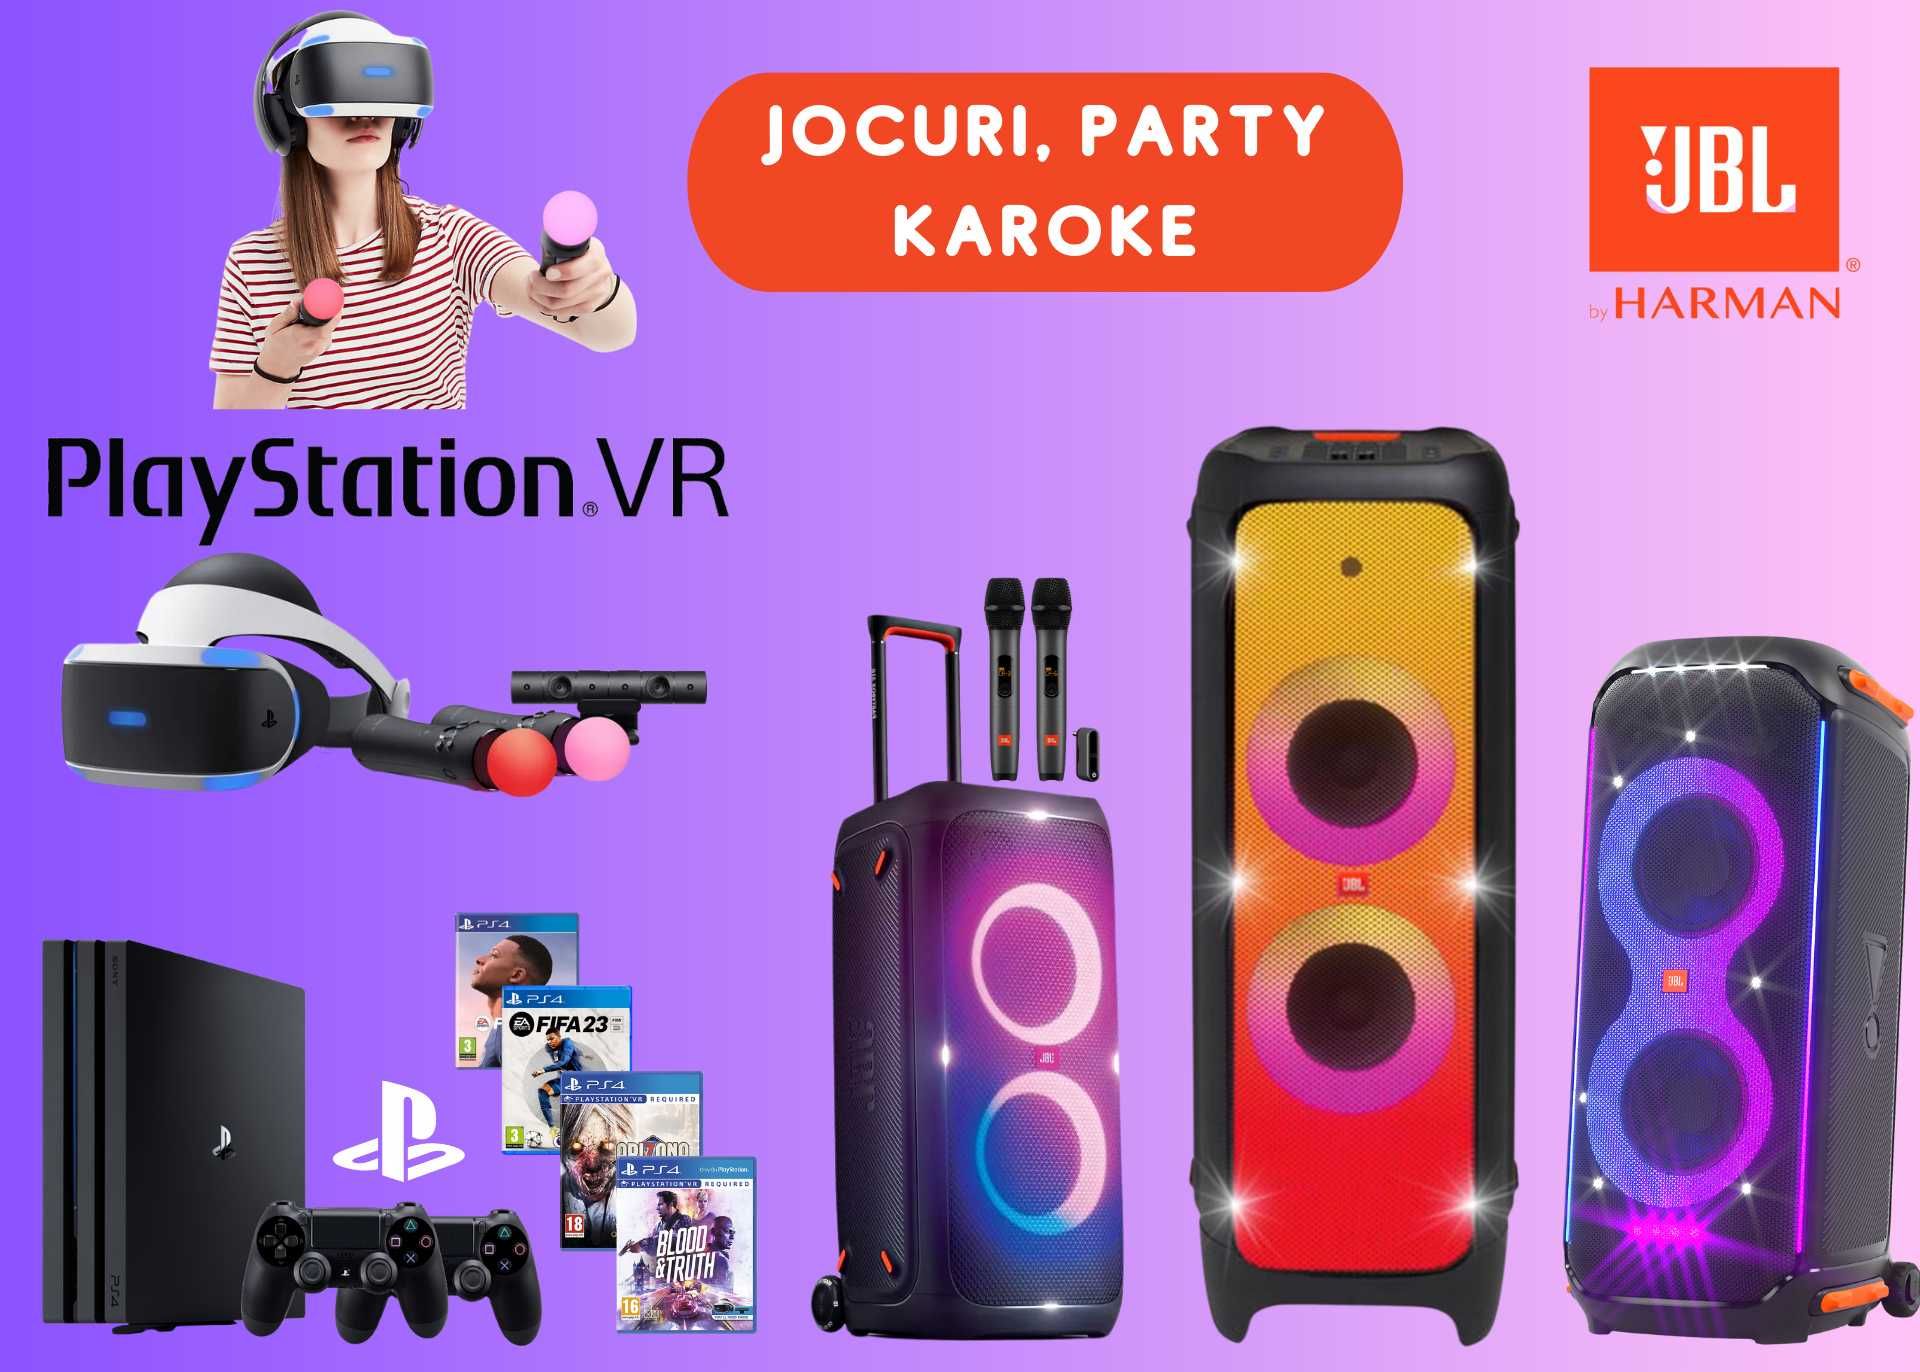 Inchiriere Boxe JBL Petrecere PlayStation 4 PS VR Lumini Disco Party